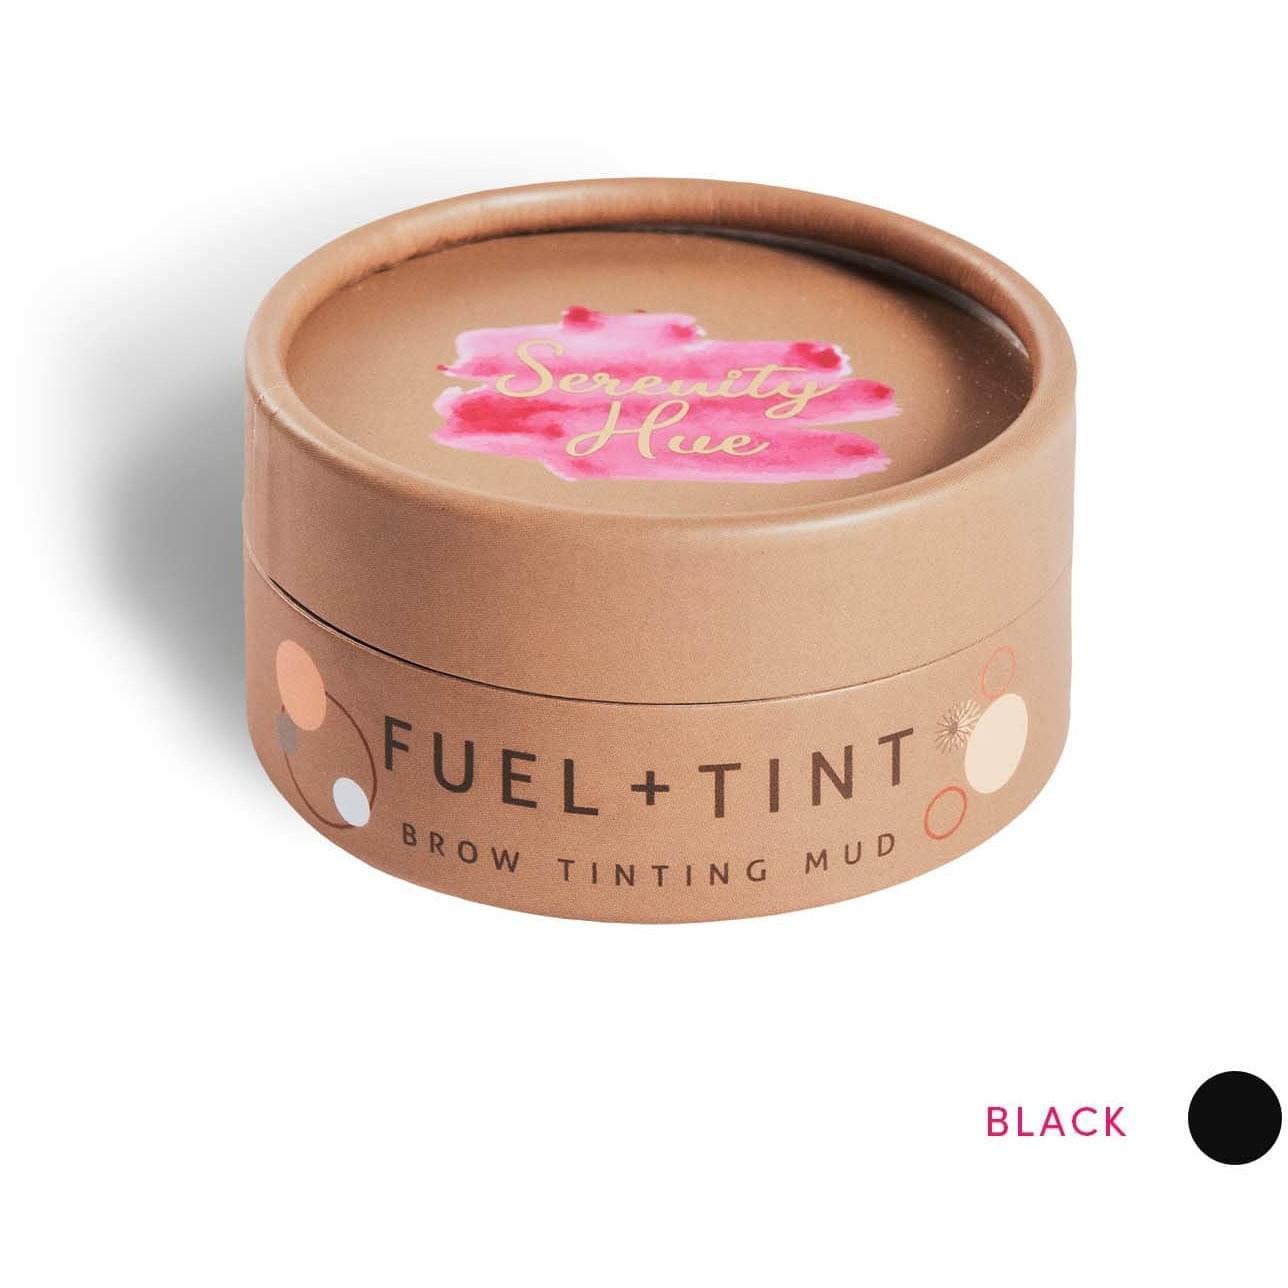 Fuel & Tint – Black Brow Tinting Mud - SerenityHue